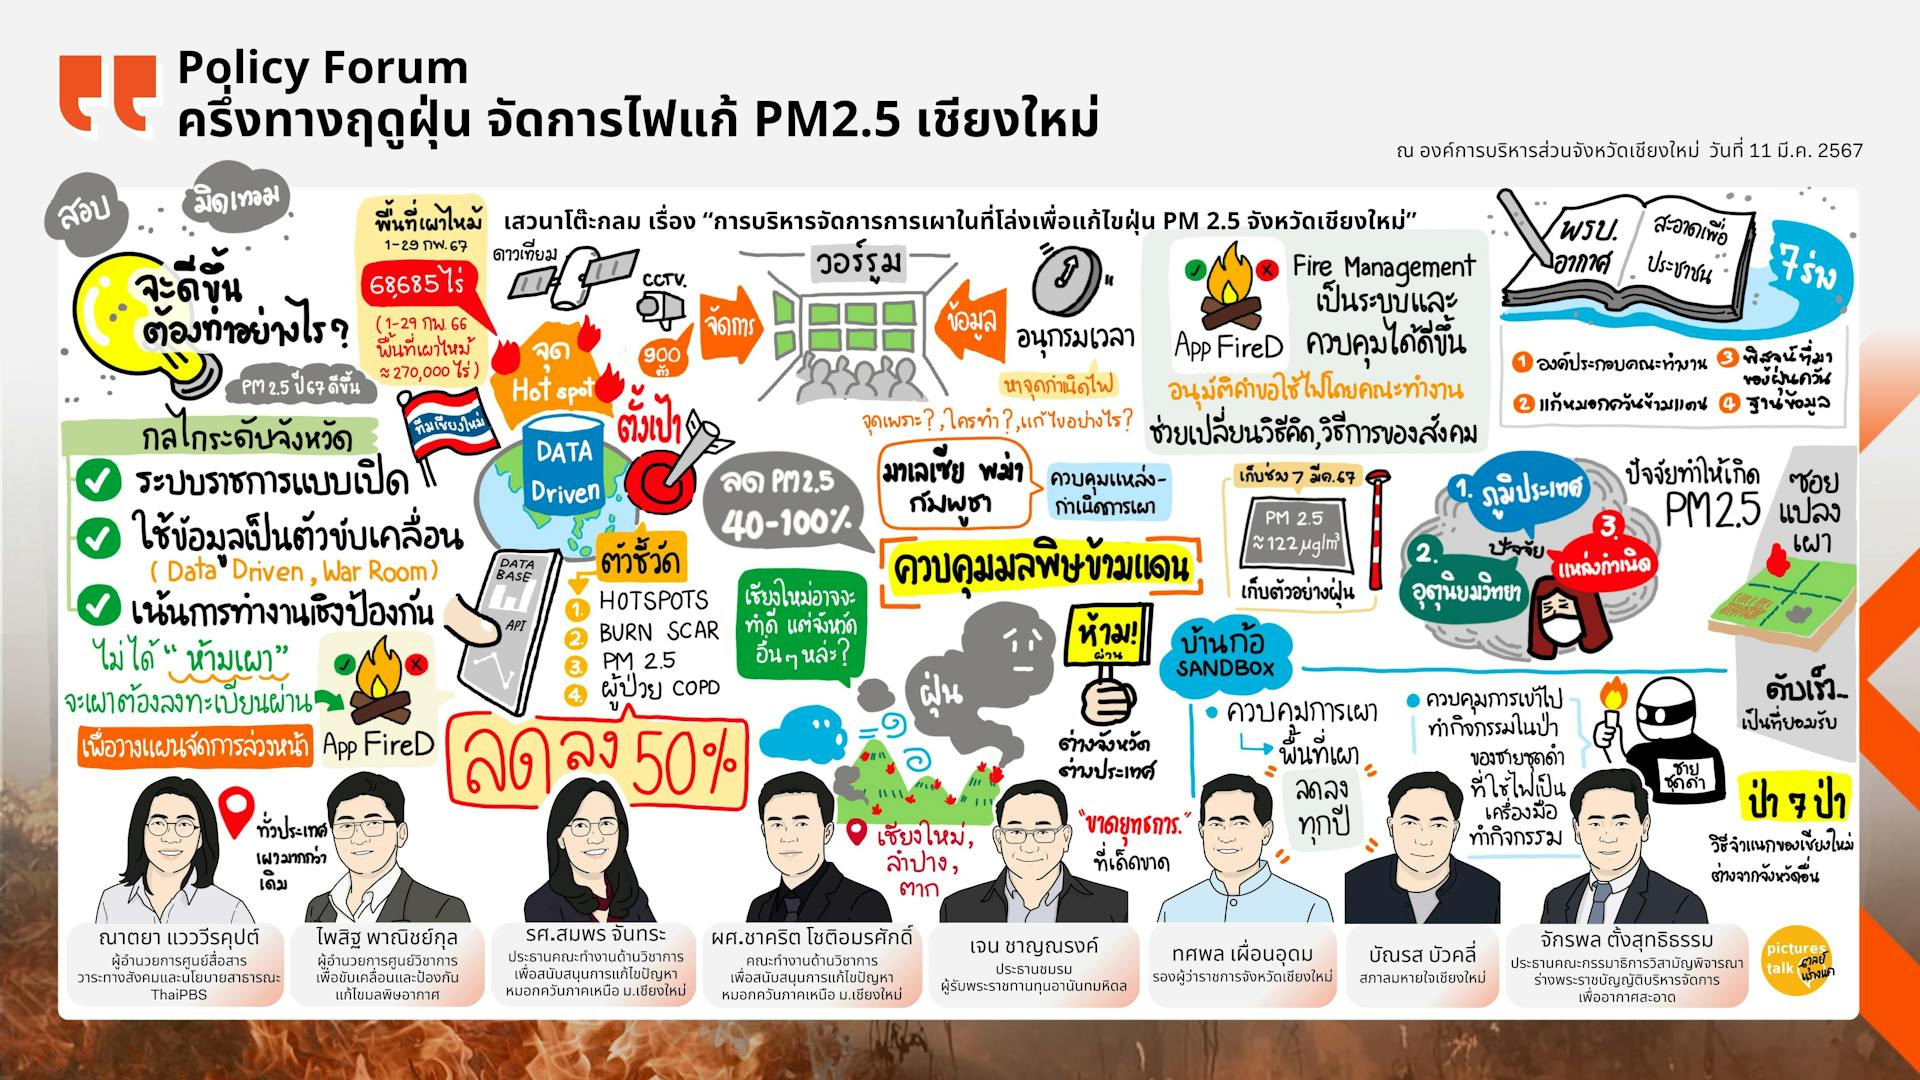 Policy Forum ครั้งที่ 8 I แก้ PM 2.5 เชียงใหม่